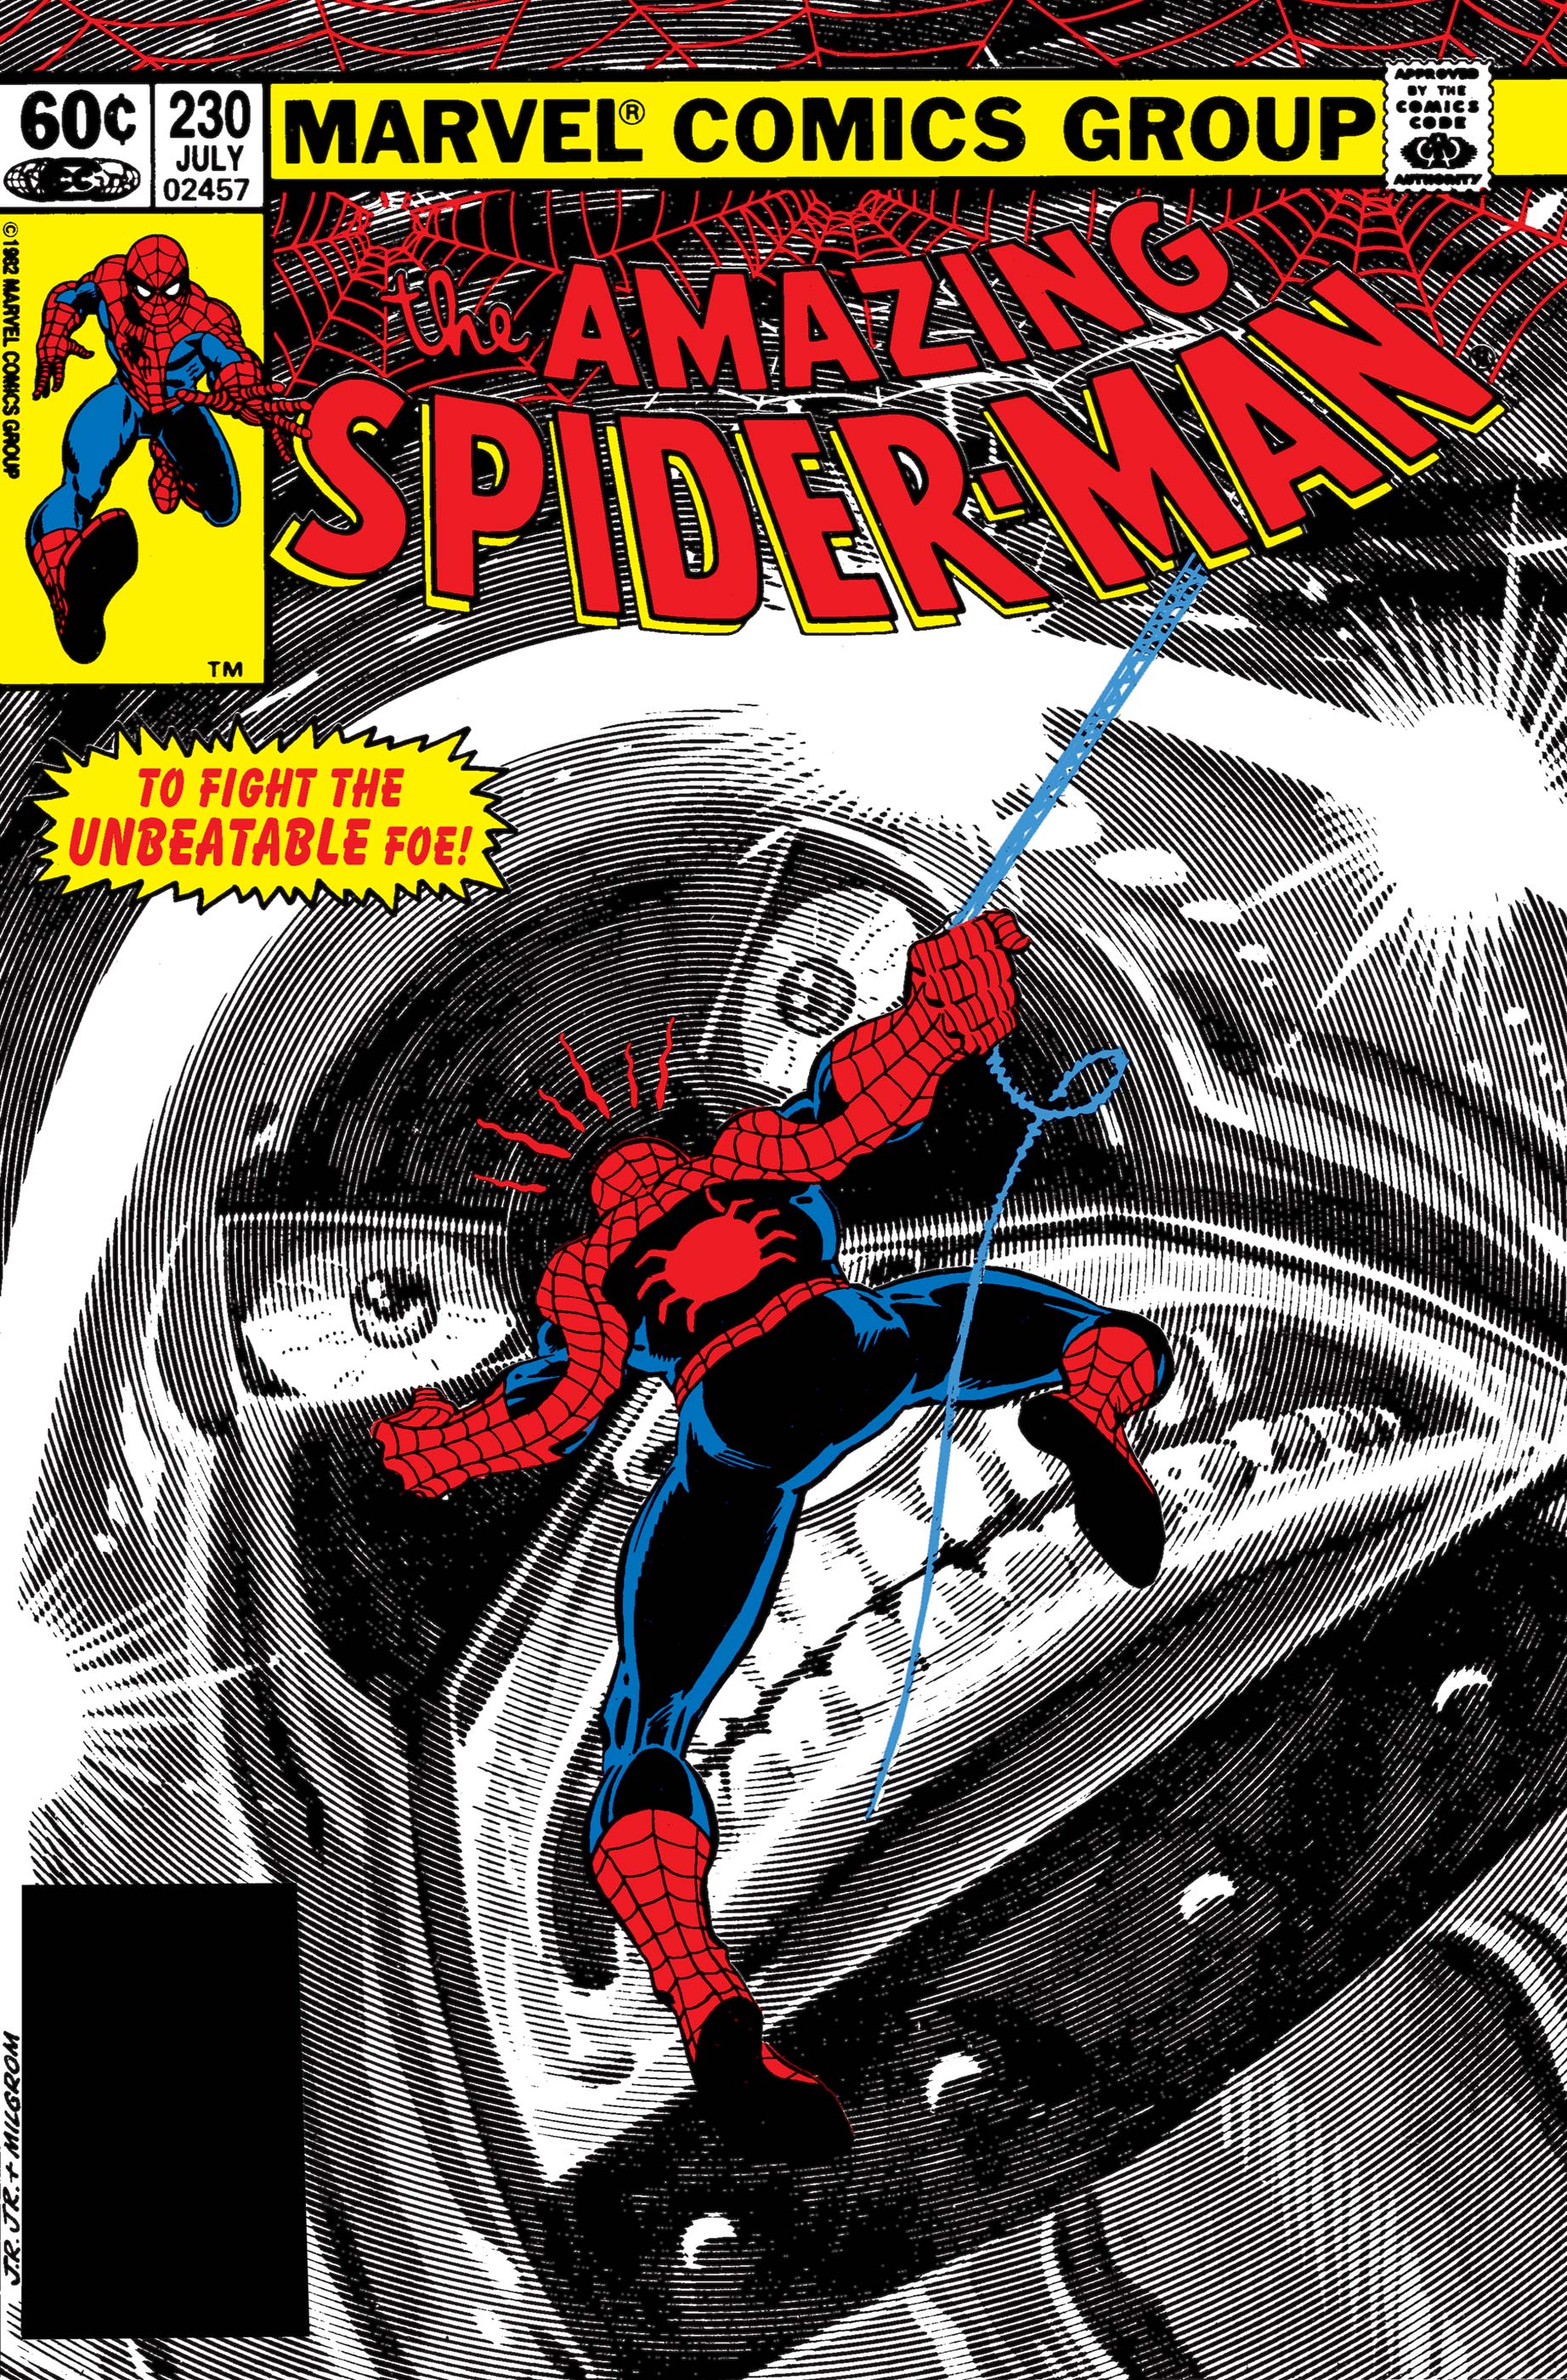 The Amazing Spider-Man (1963) #230